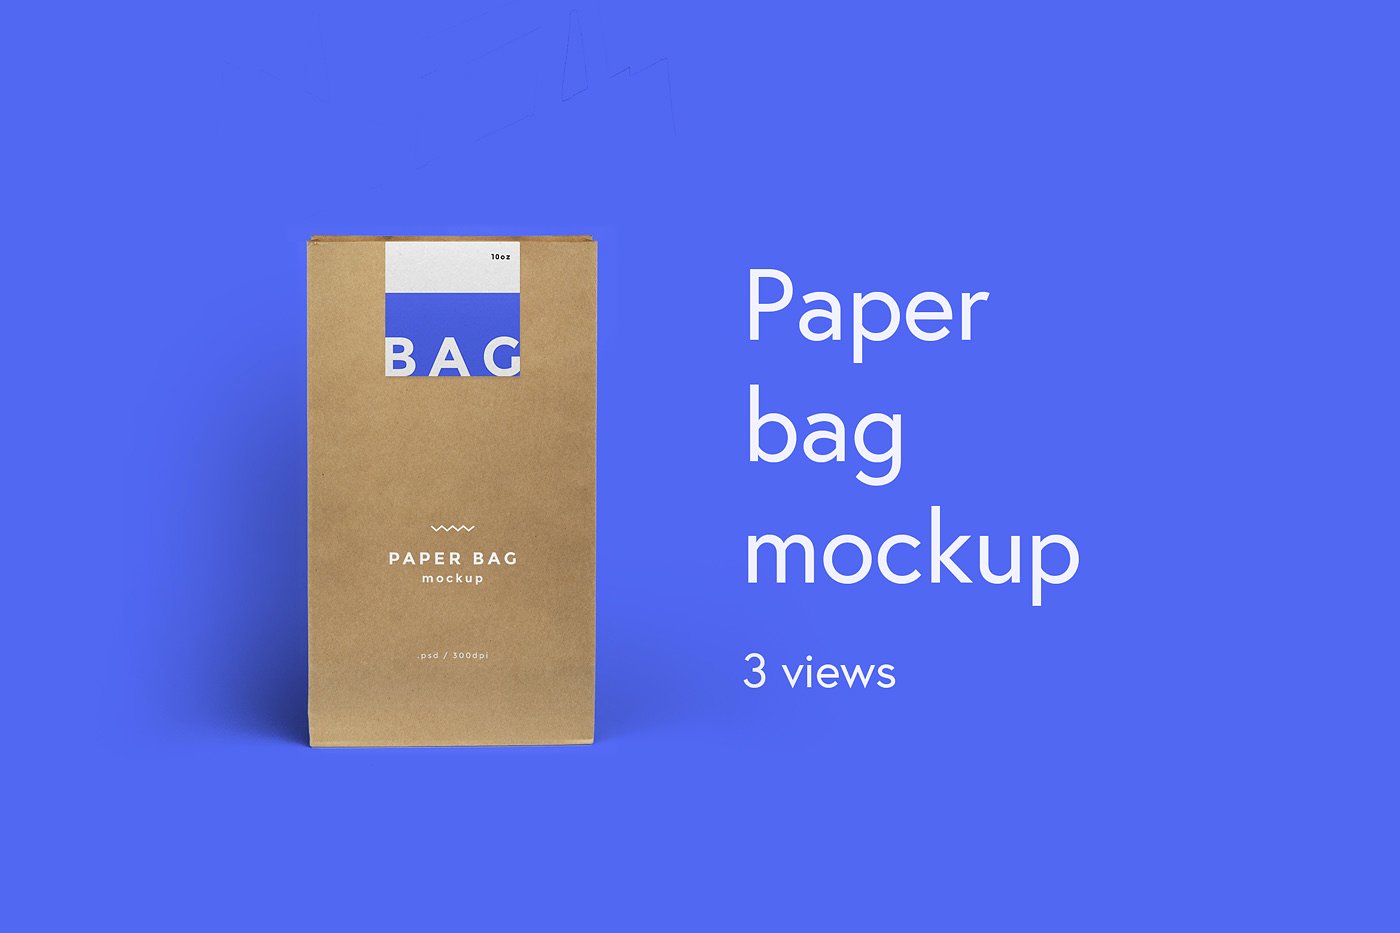 A paper bag mockup template on blue background